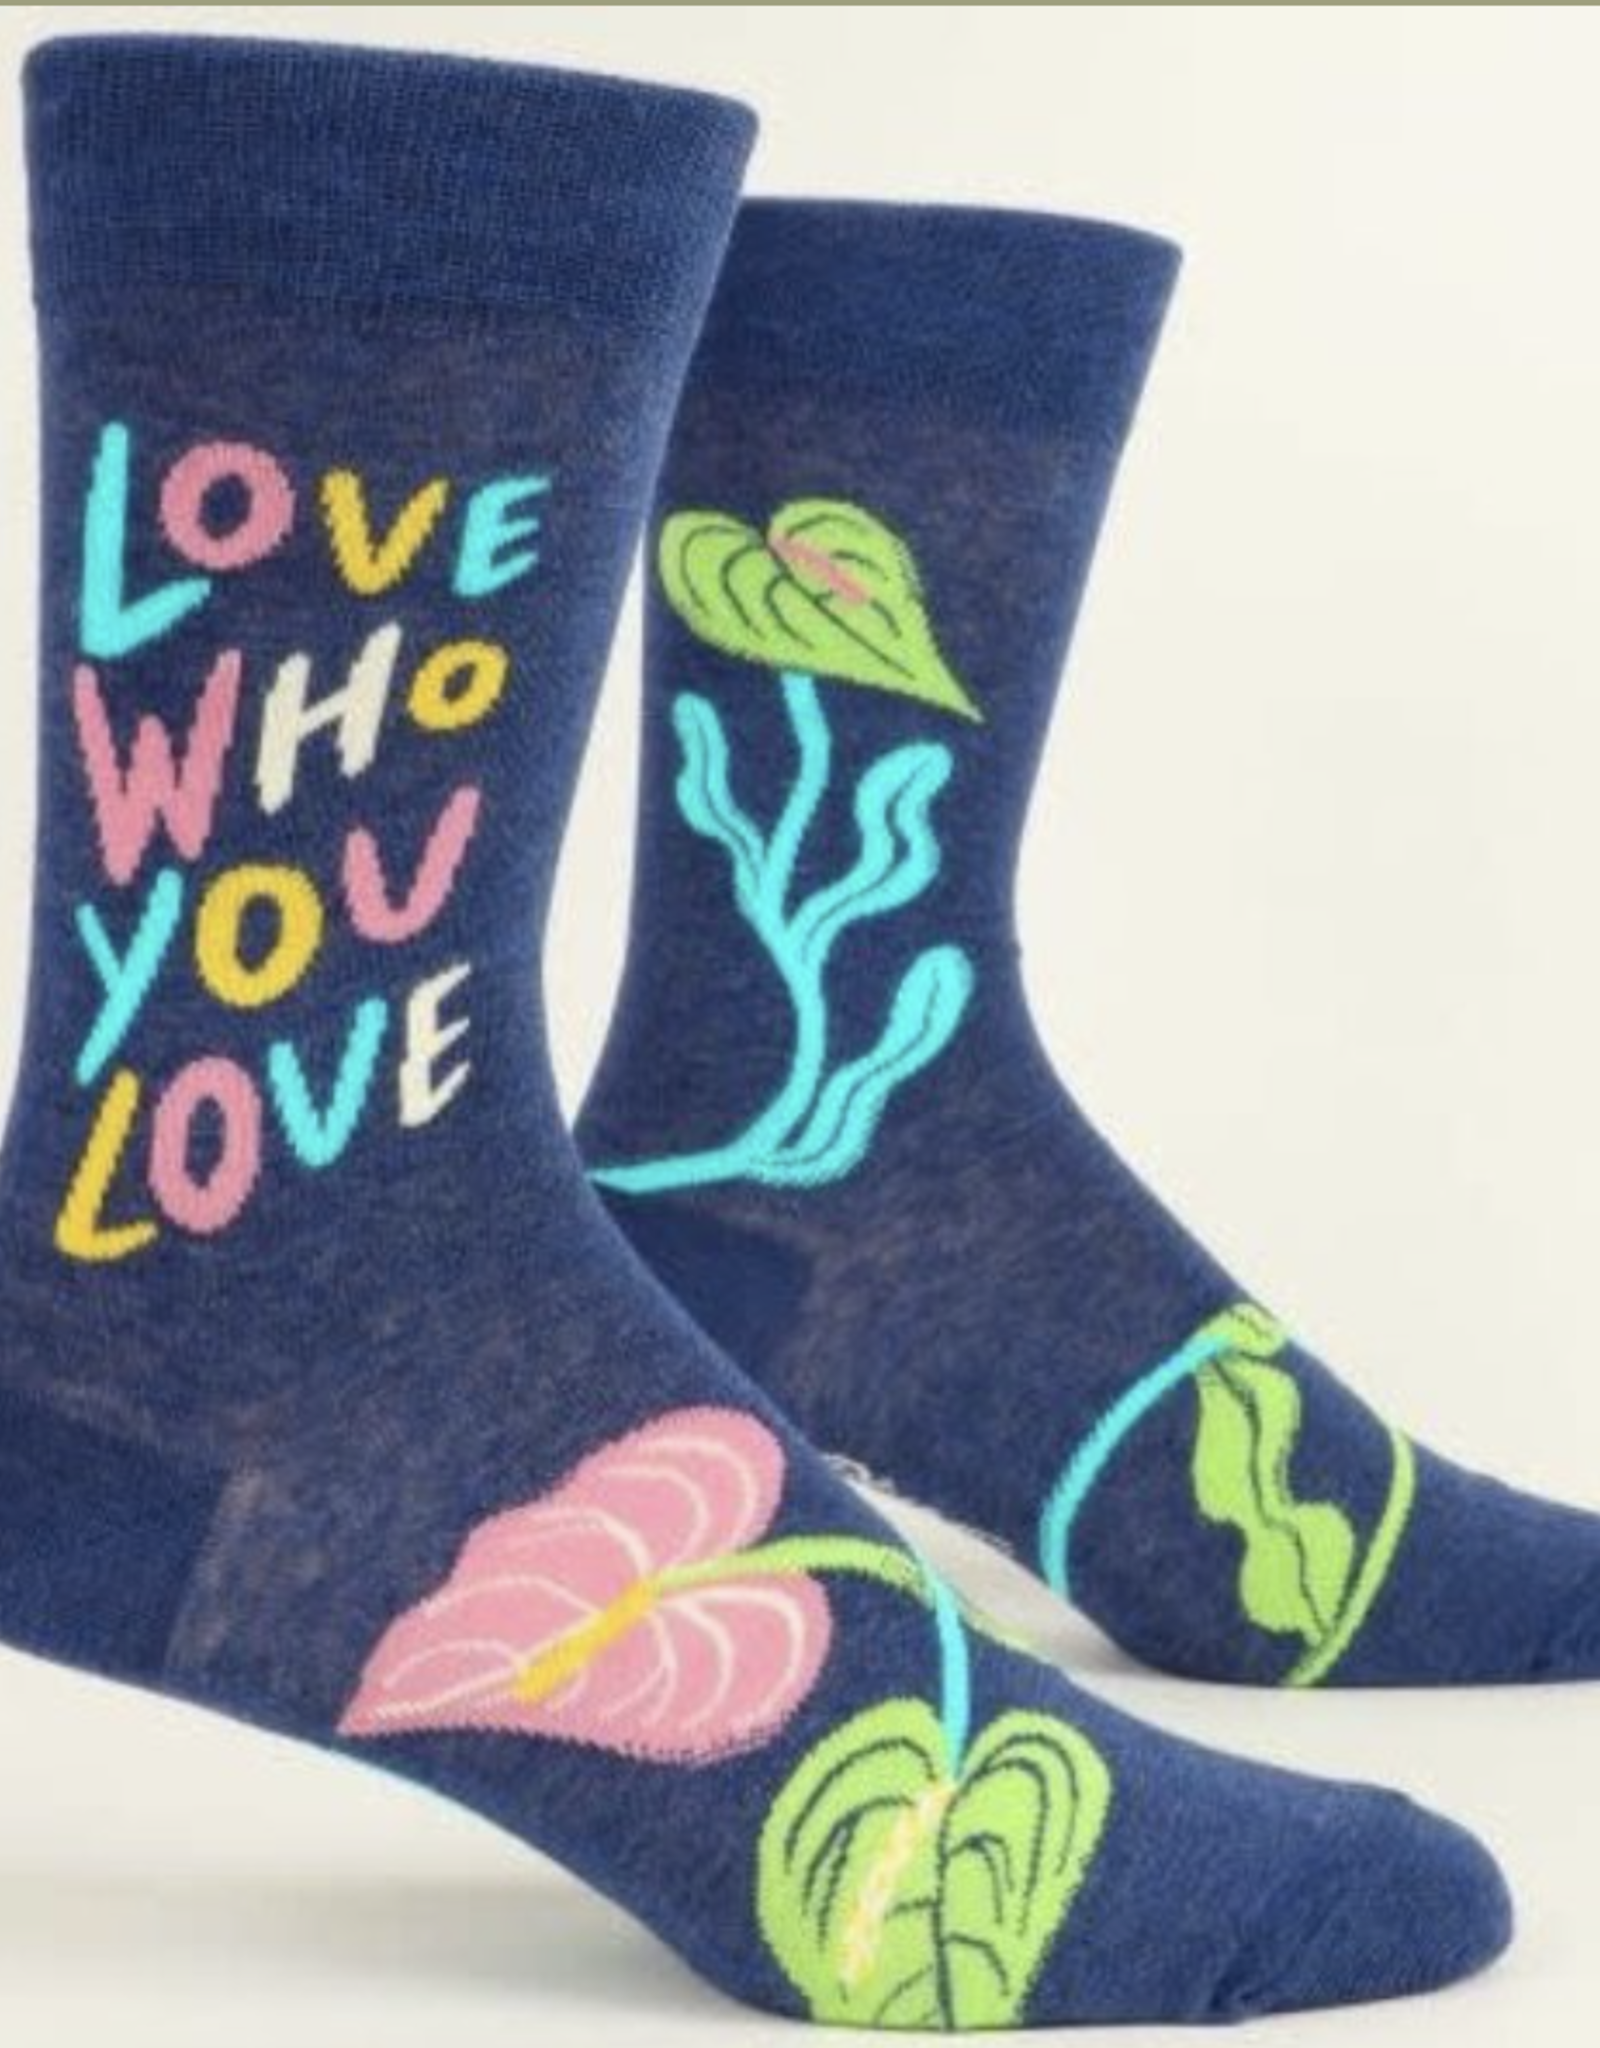 Love who you love socks